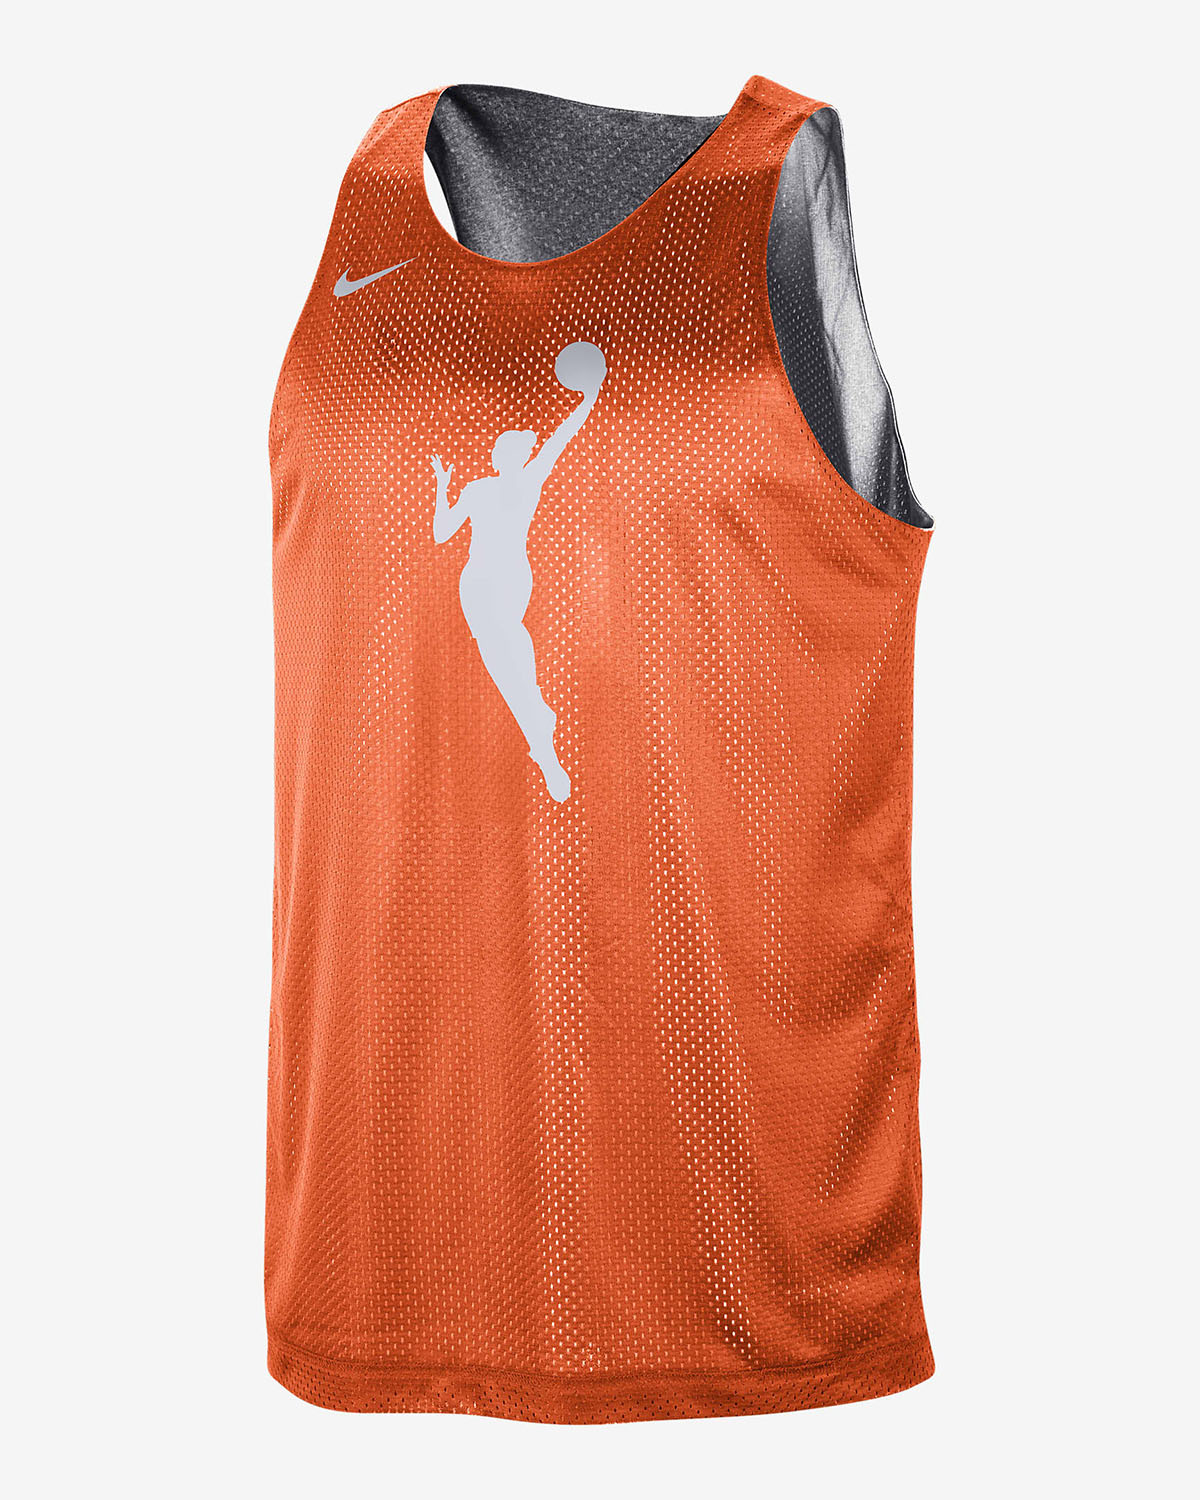 Nike WNBA Jersey Orange